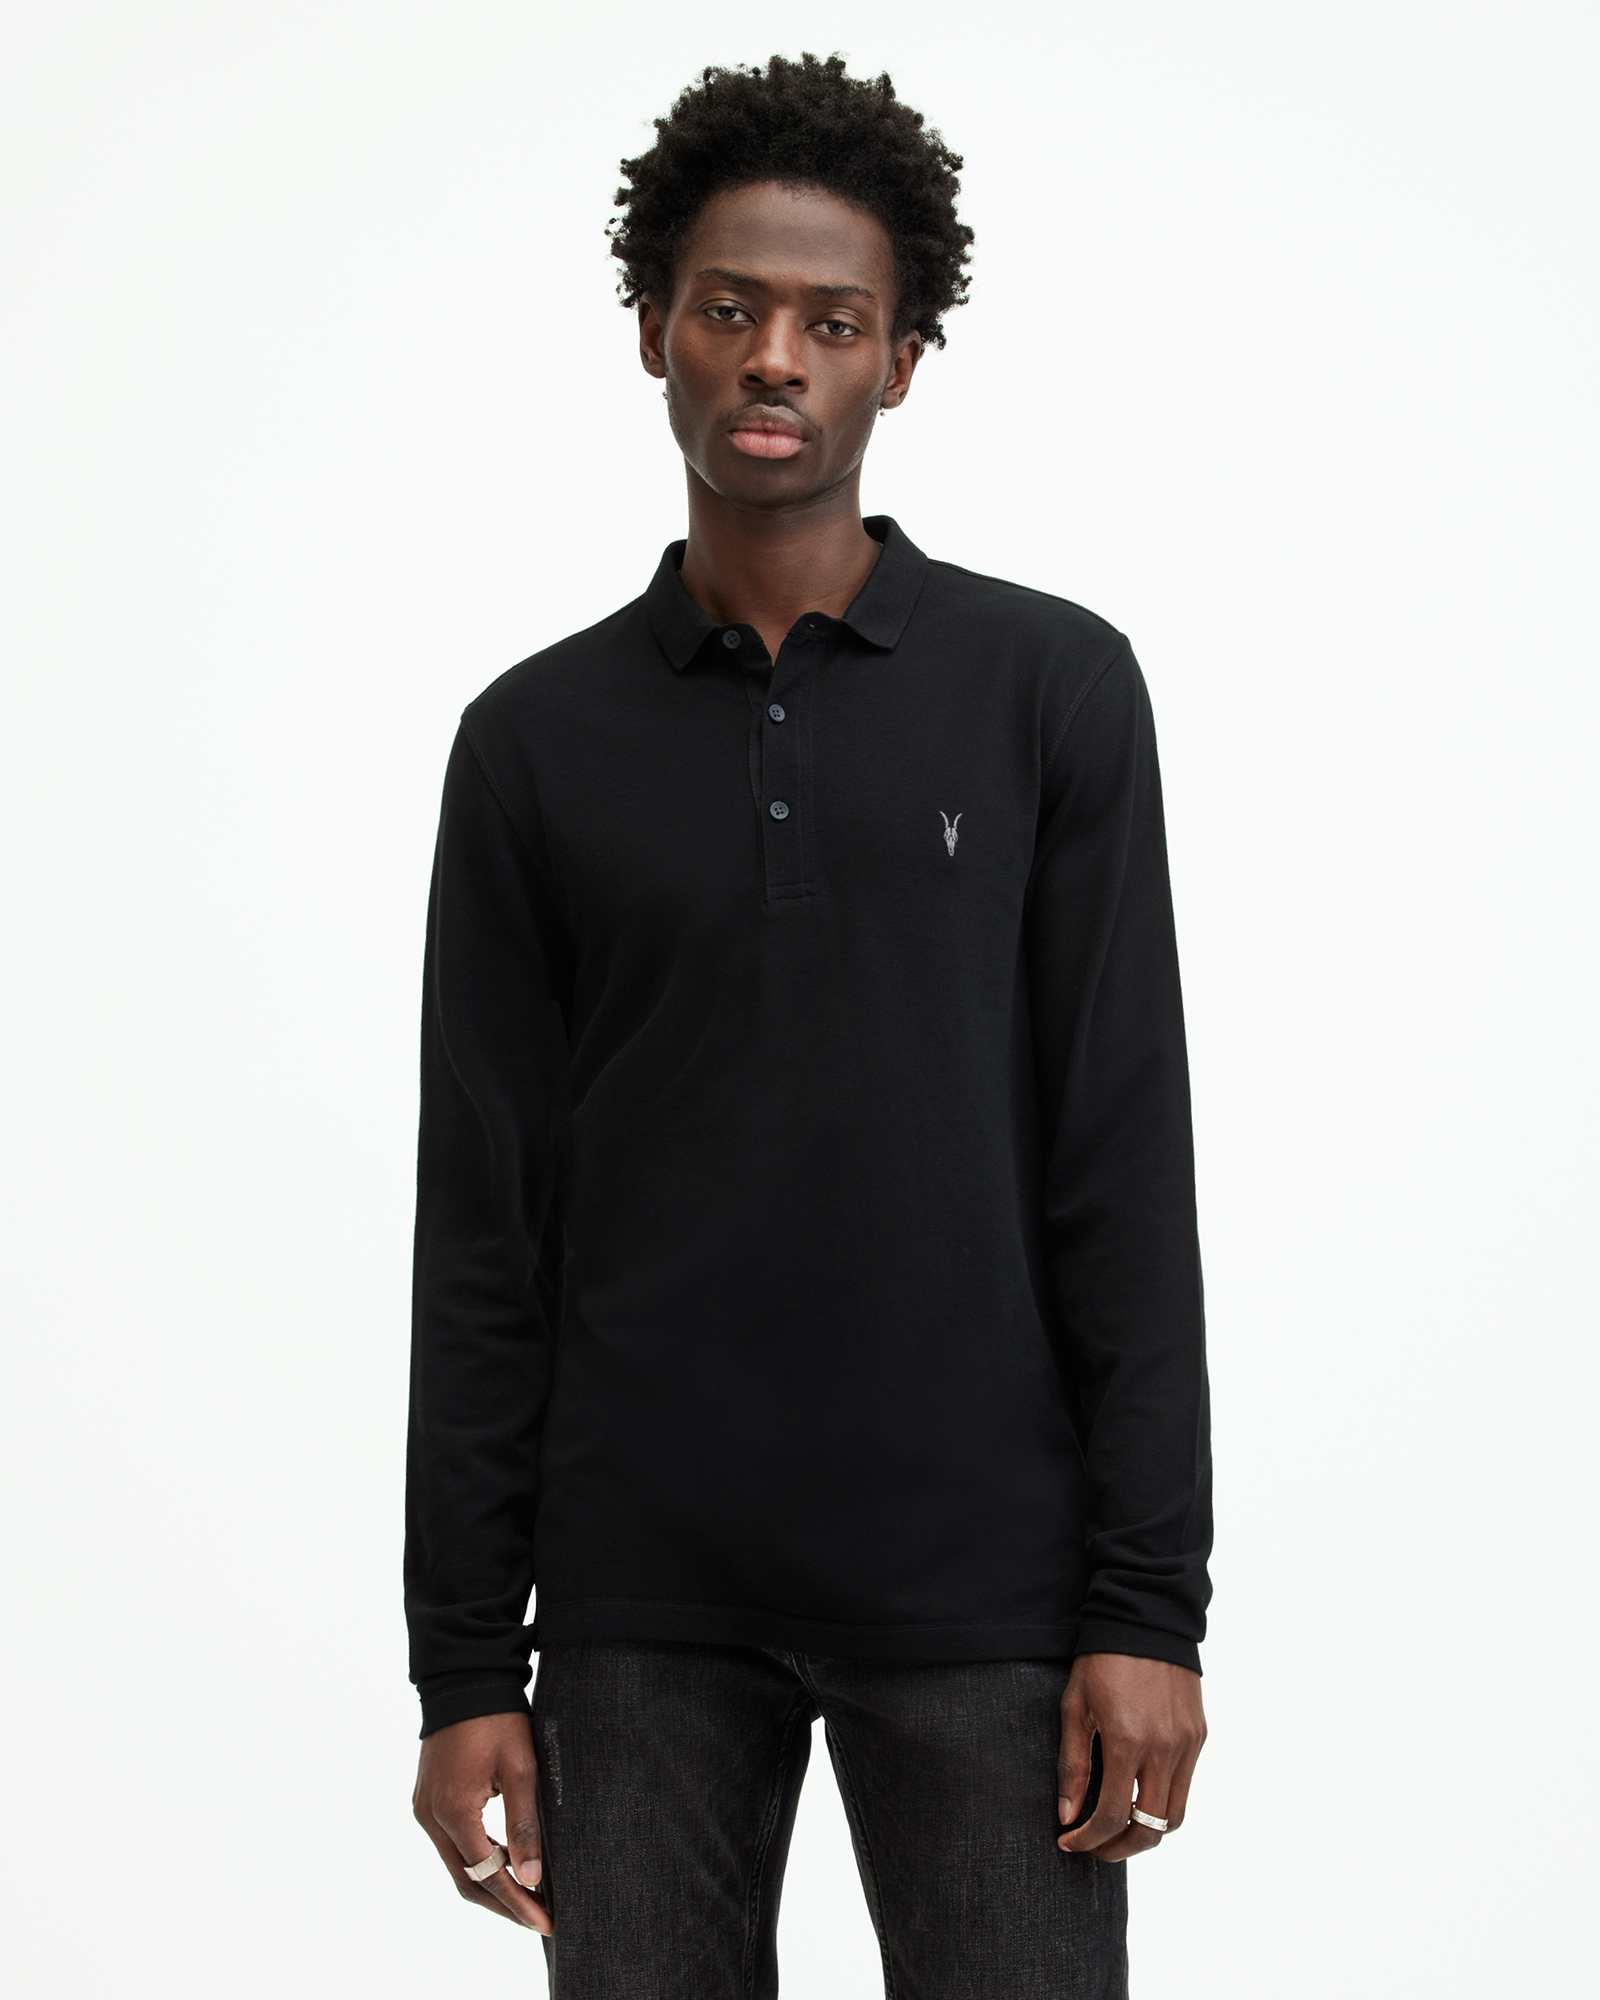 AllSaints Men's Cotton Reform Long Sleeve Polo Shirt, Black